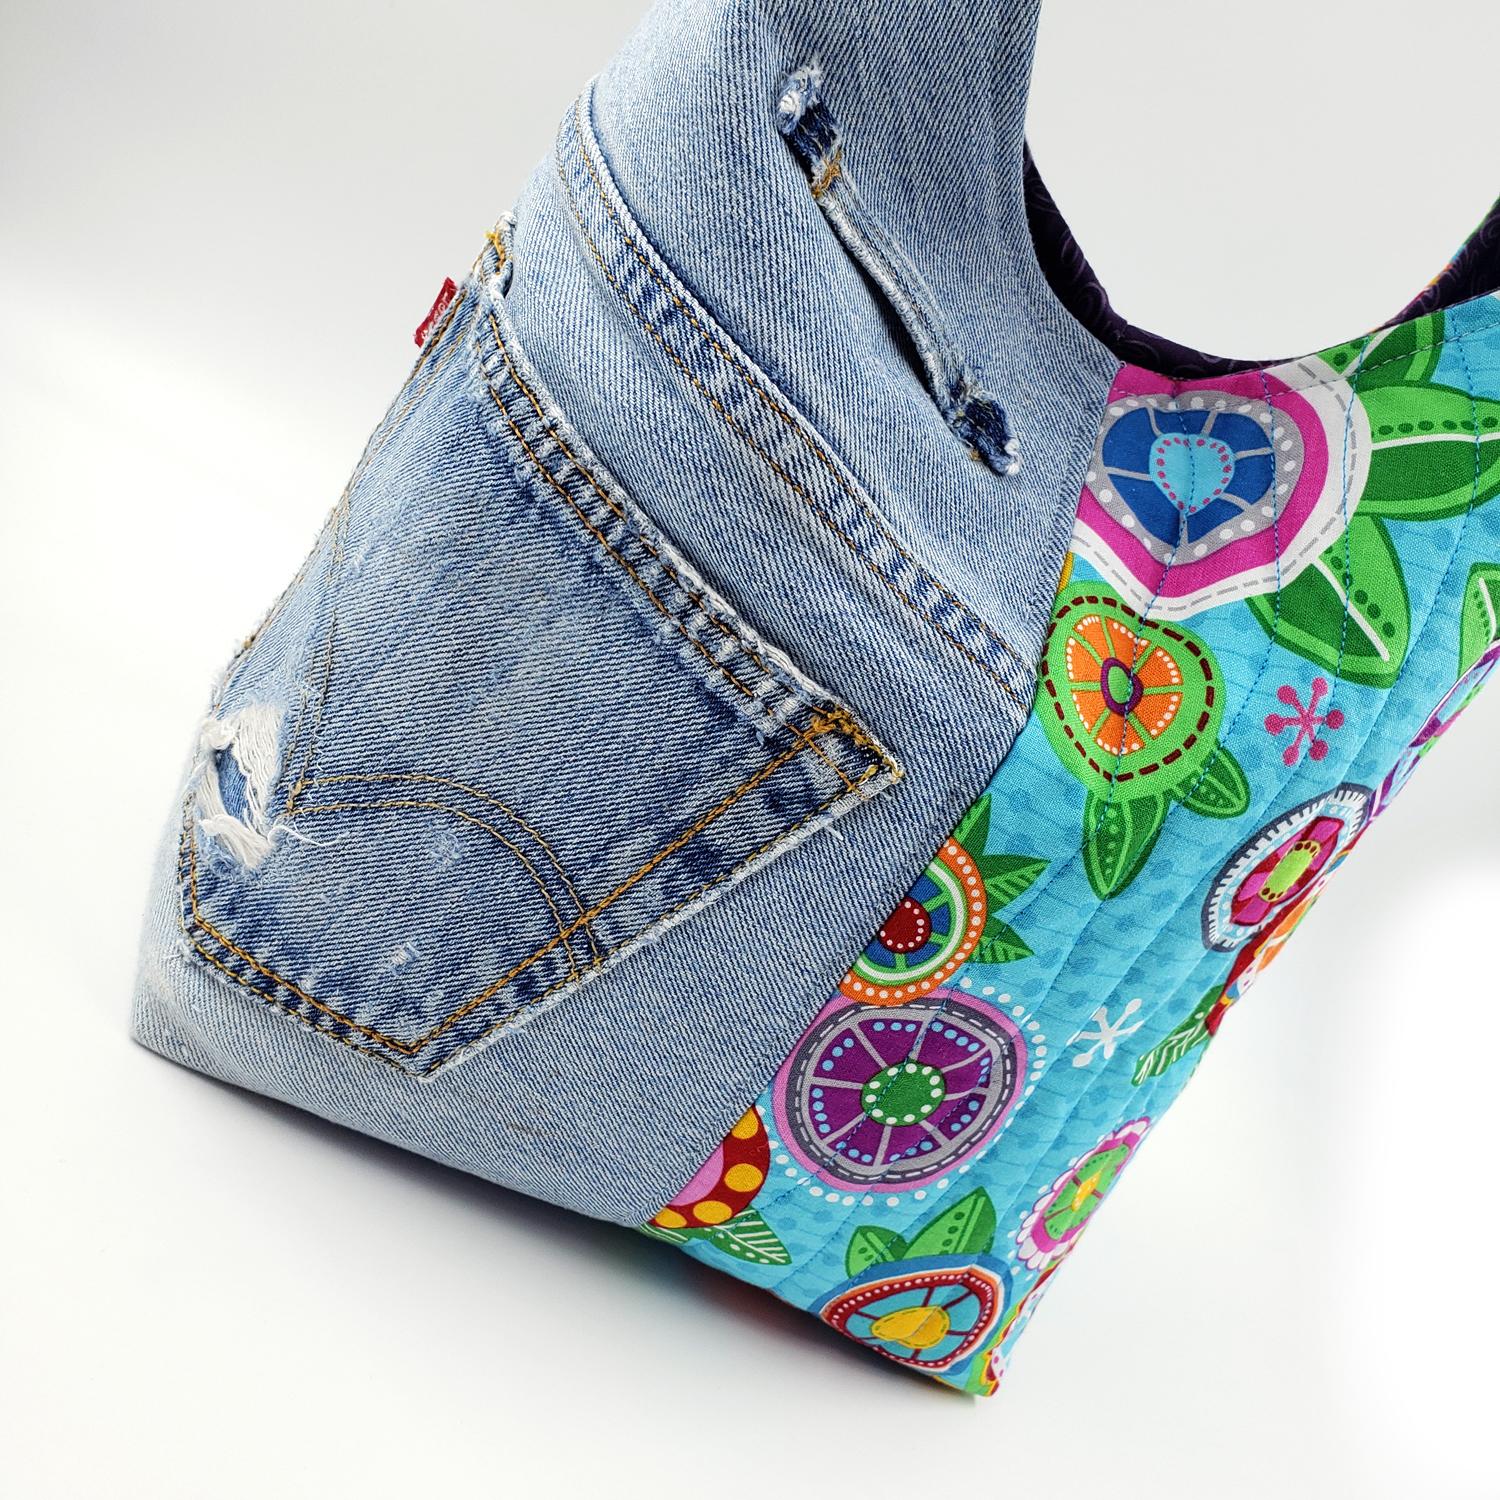 FuzzBag upcycled bag, daisy talk, blue,vivid,colourful,boho,festival,handbag